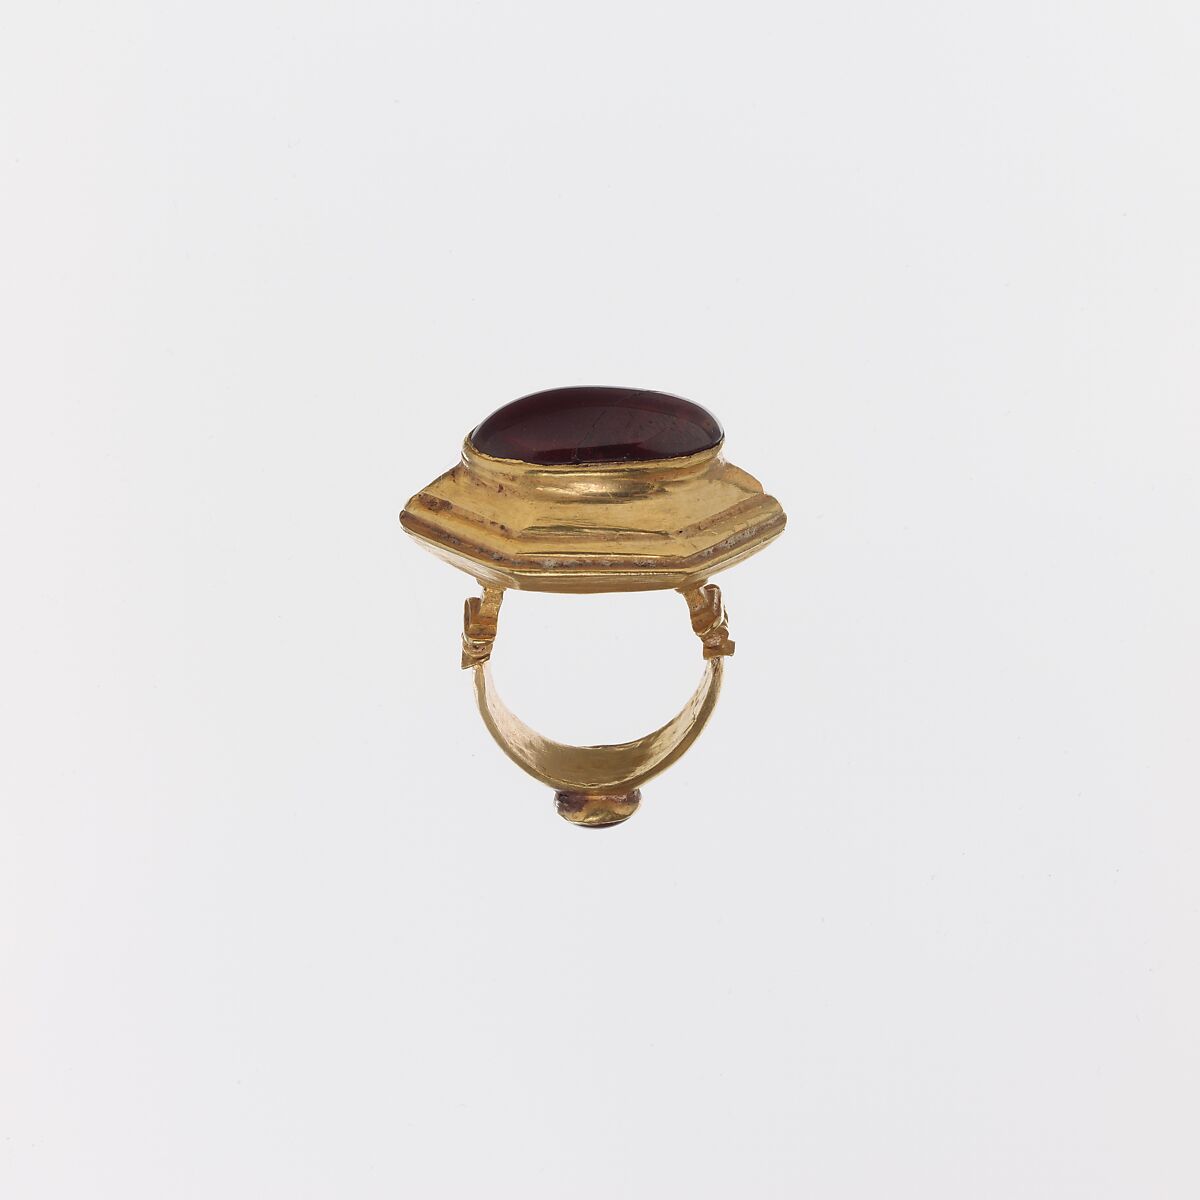 Gold and cabochon garnet ring, Gold and cabochon garnet, Greek 